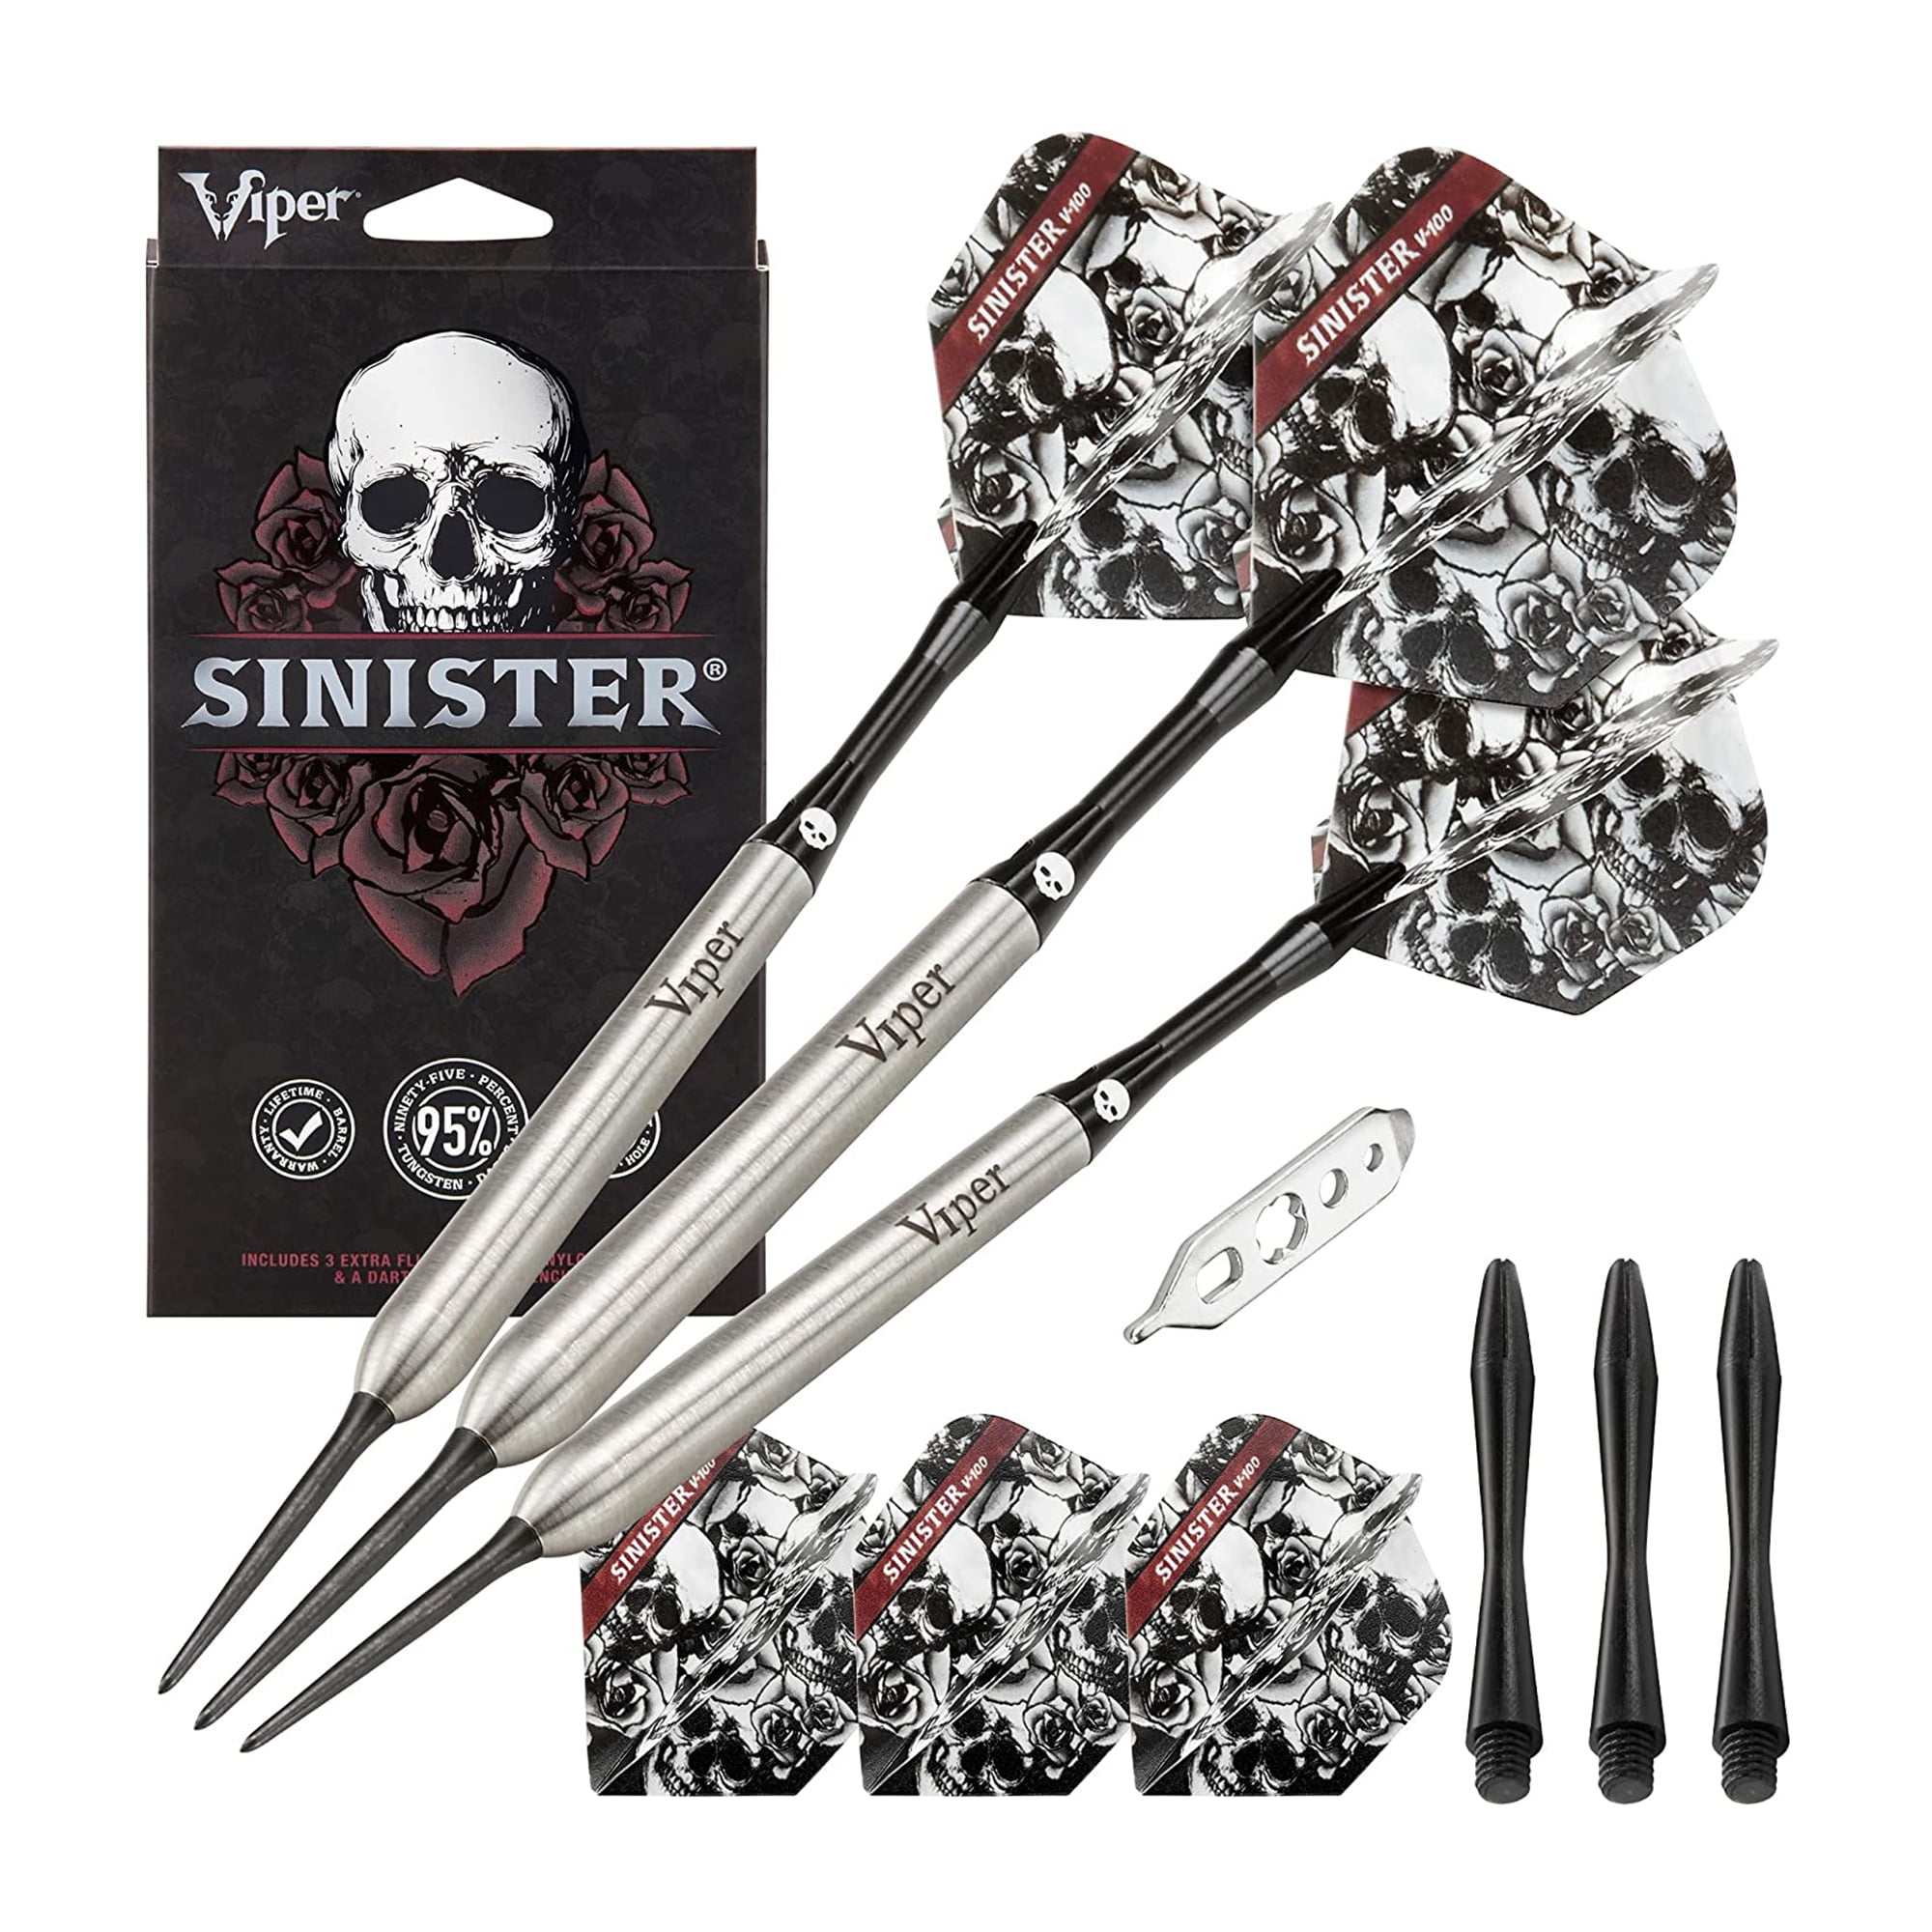 Viper Sinister 95% Tungsten Professional Steel Tip Dart Set, 25 Grams 